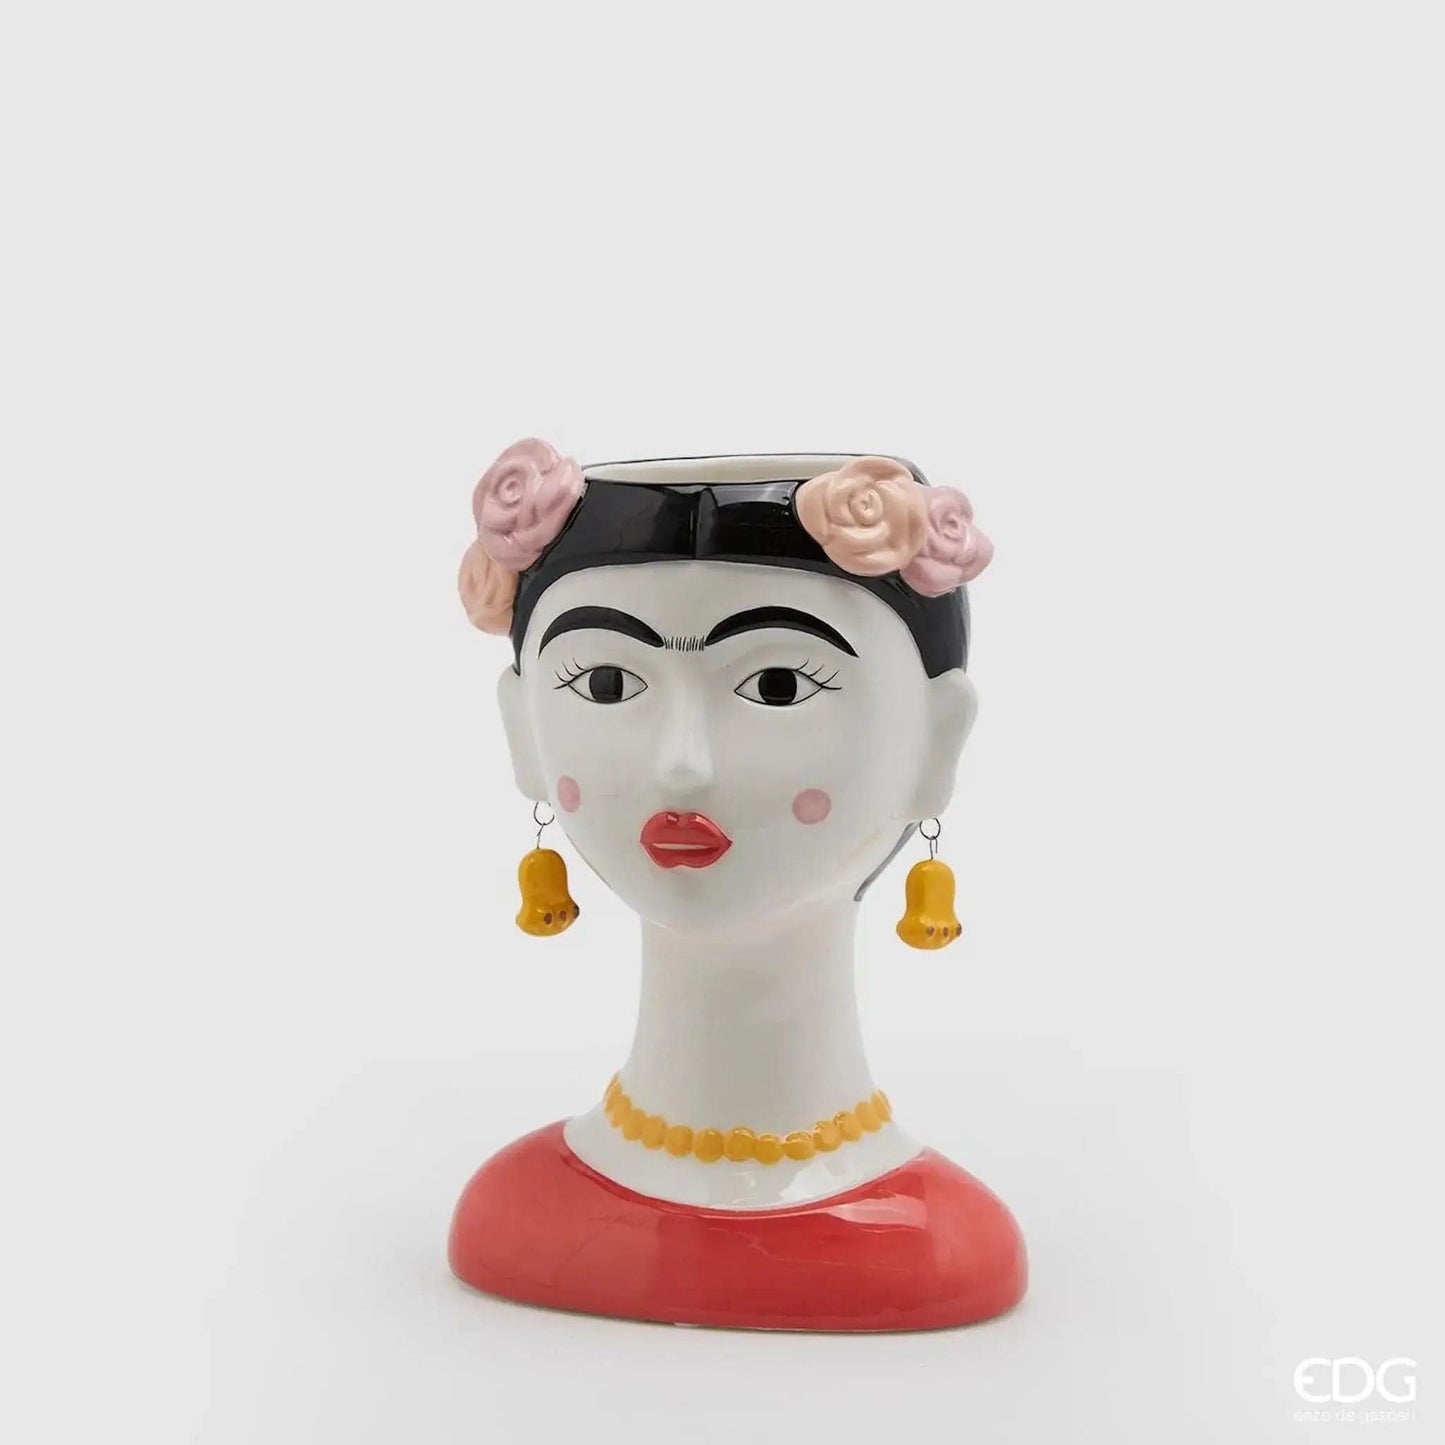 Italiving Keramikvase Blumenvase Frida Kahlo - glasierte Keramik Höhe 22 cm Ø 15/12 cm